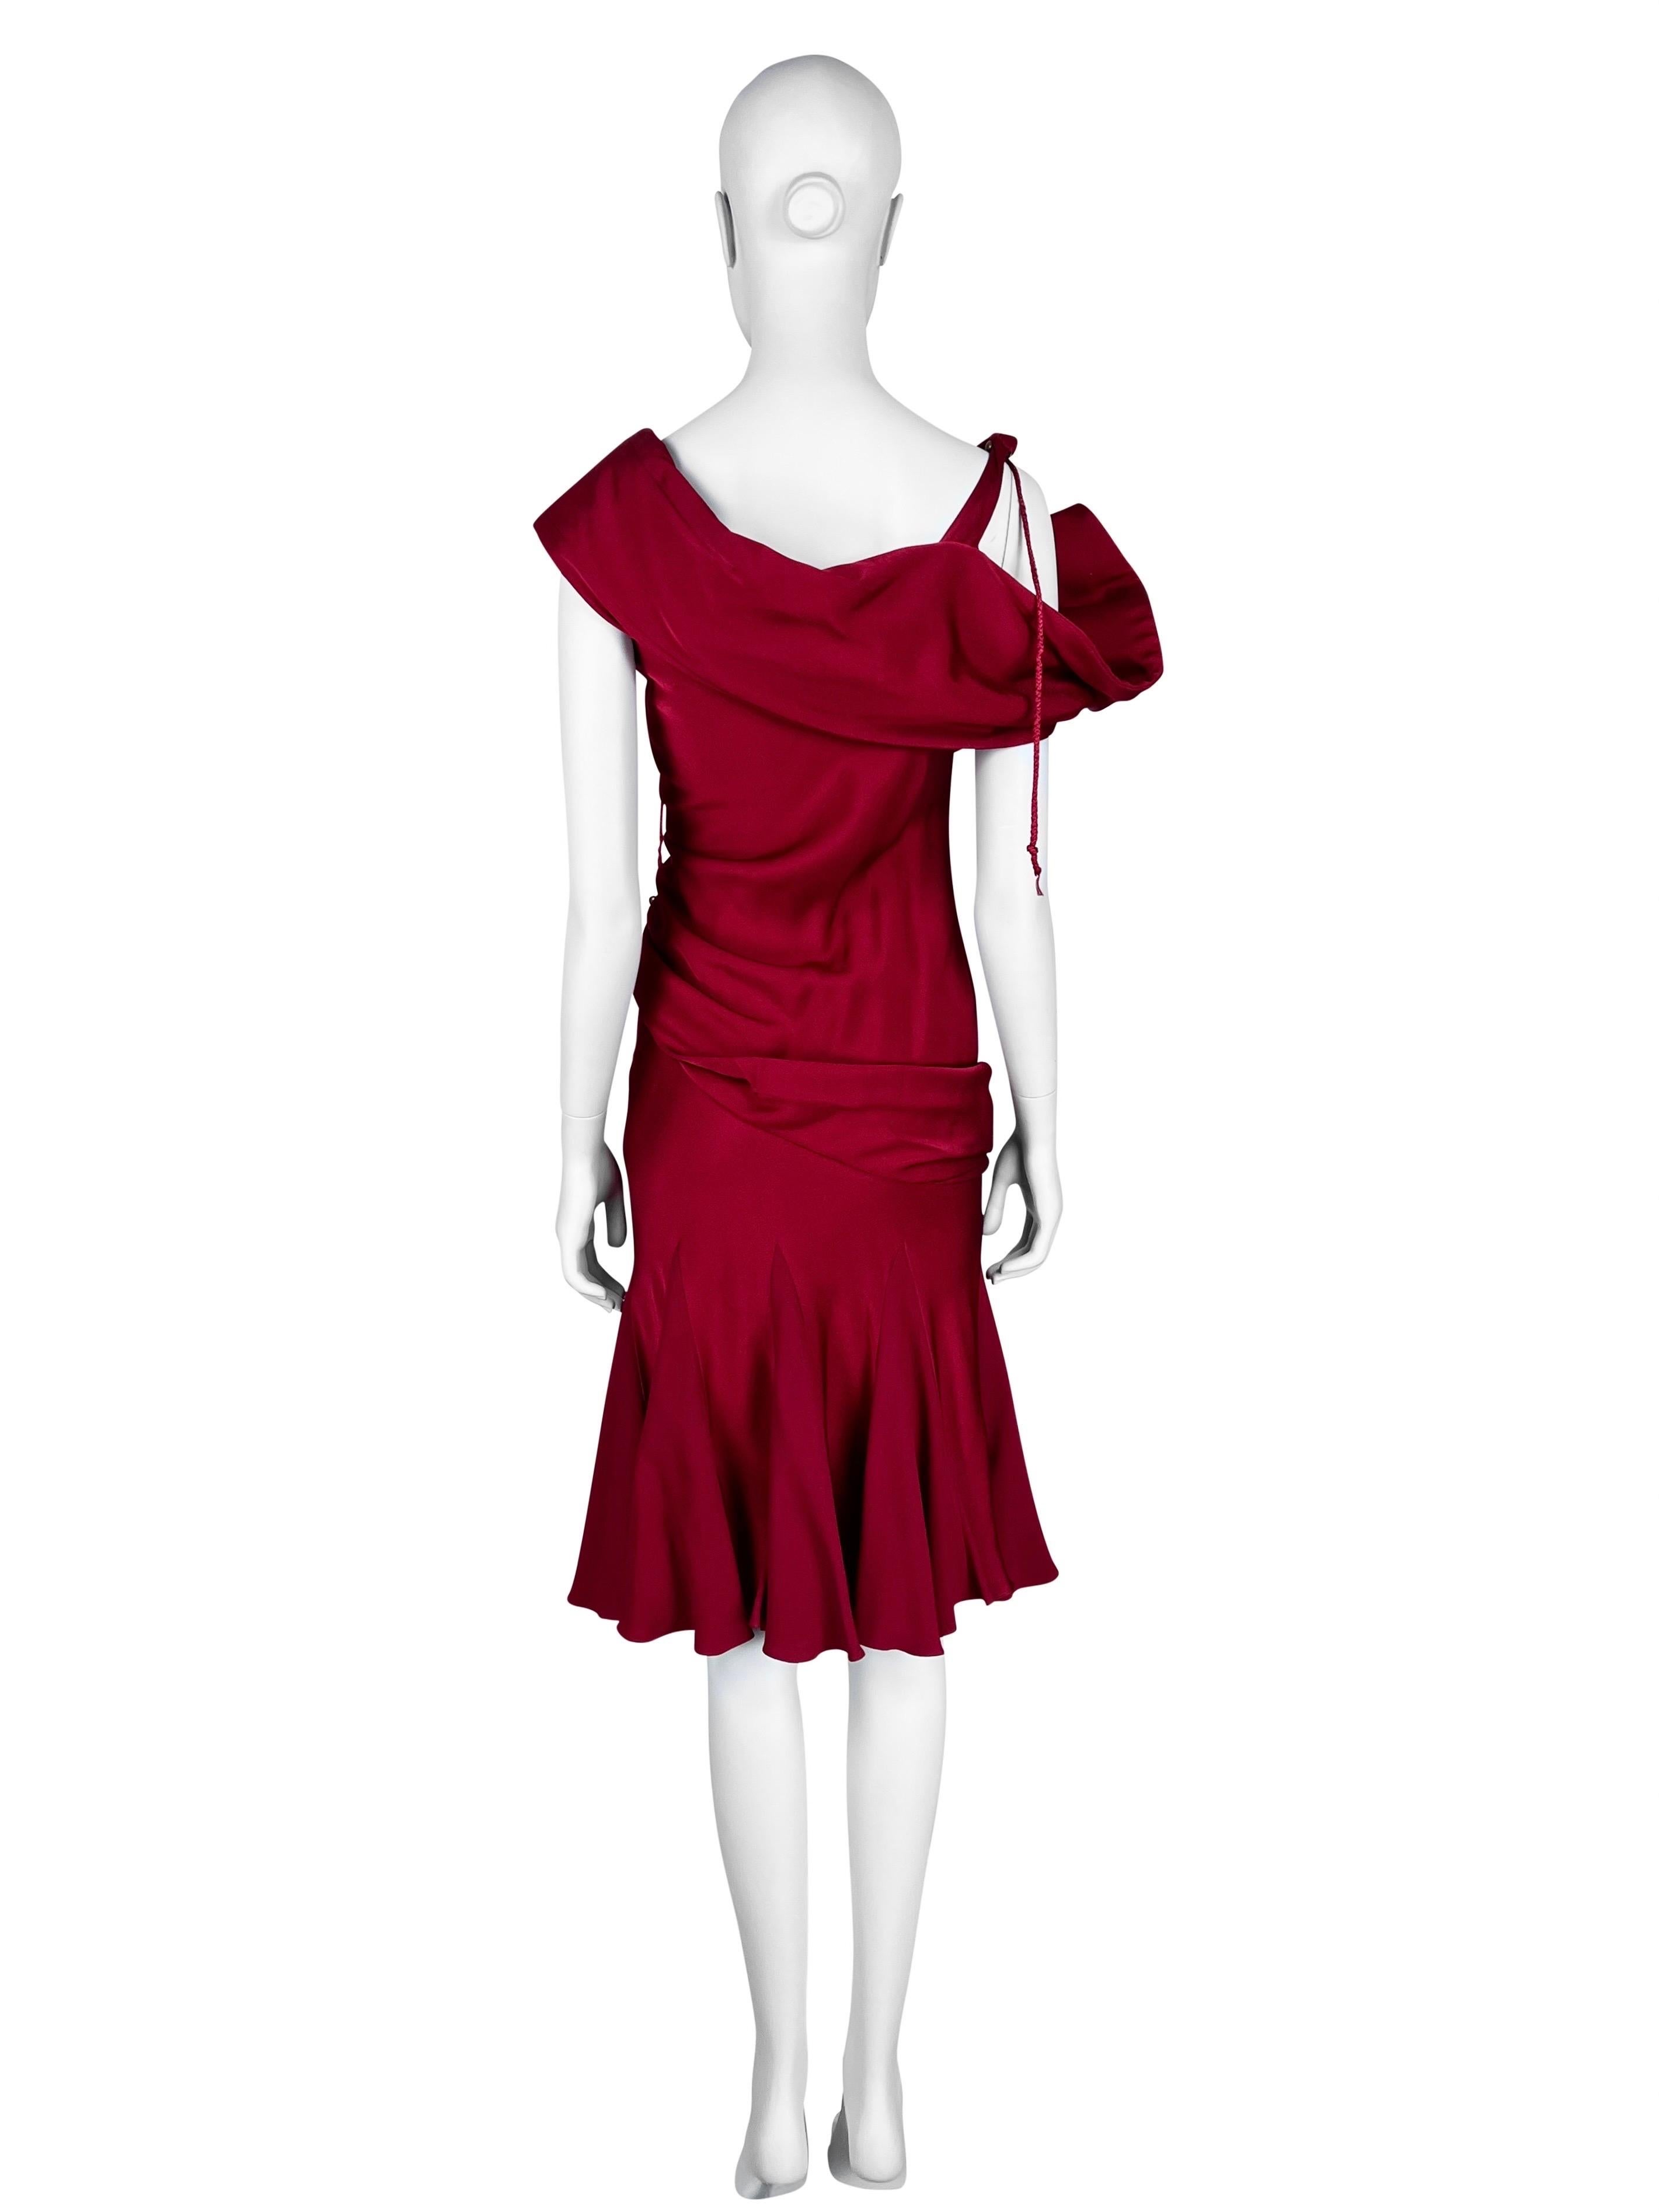 John Galliano Fall 2002 Red Draped Dress For Sale 1